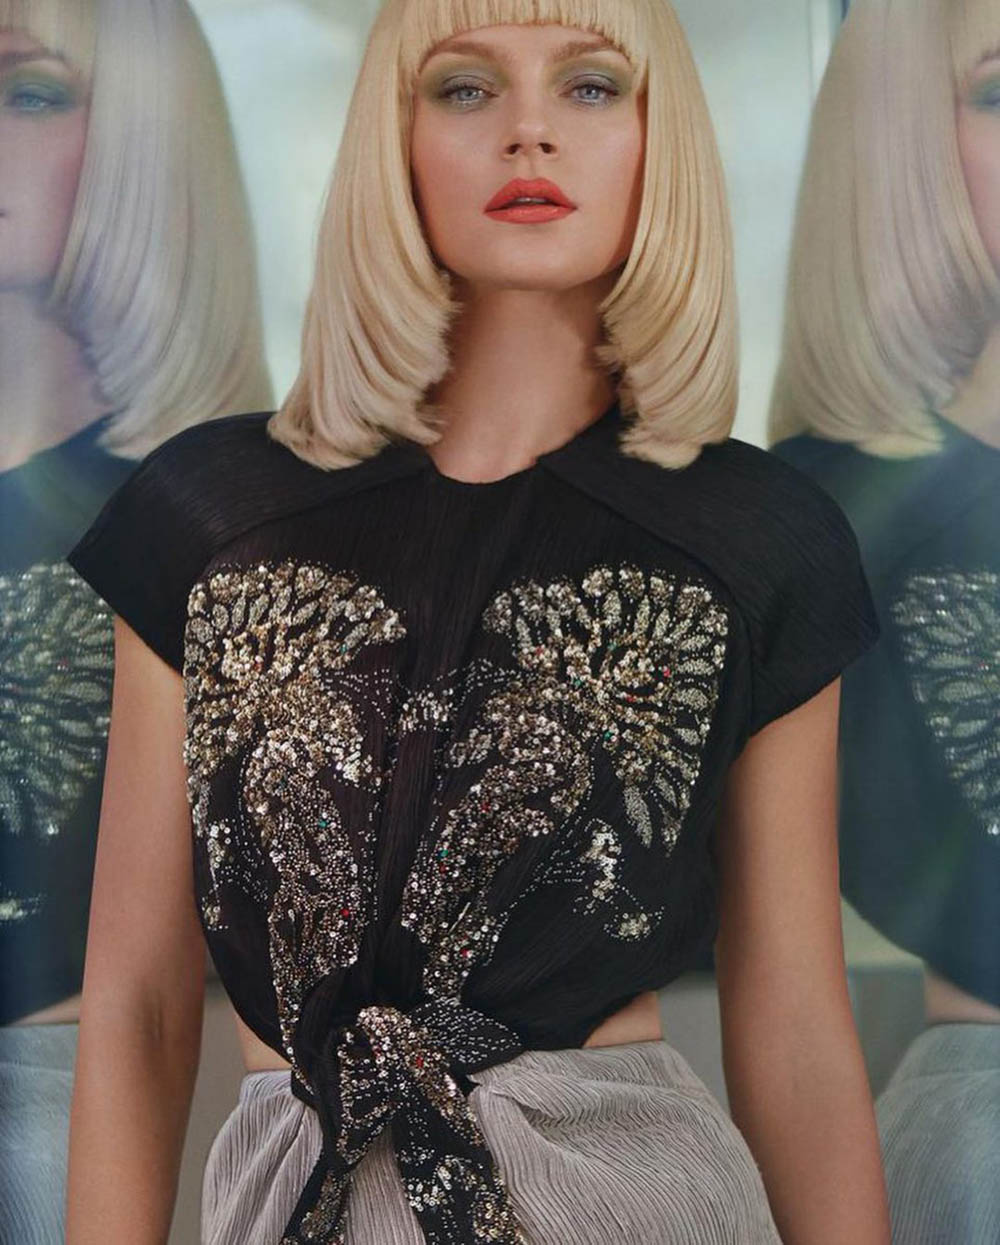 Jessica Stam covers Harper’s Bazaar Kazakhstan December 2018 January 2019 by Greg Swales